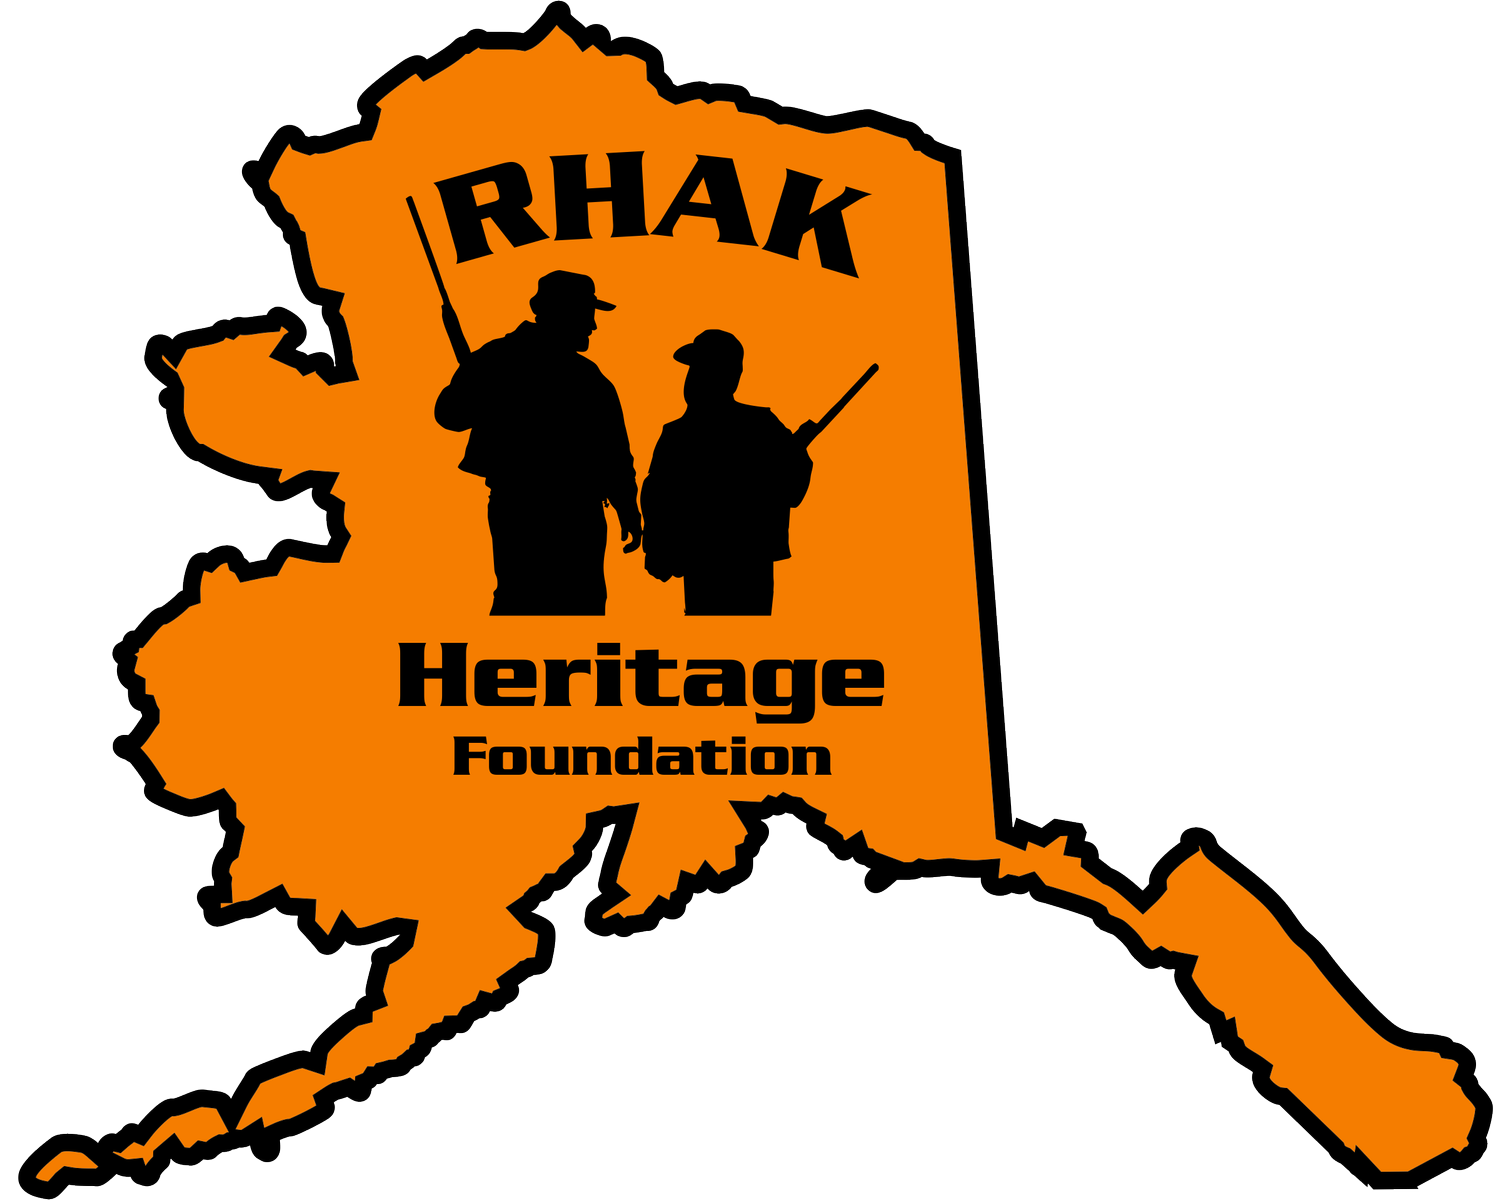 RHAK Heritage Foundation